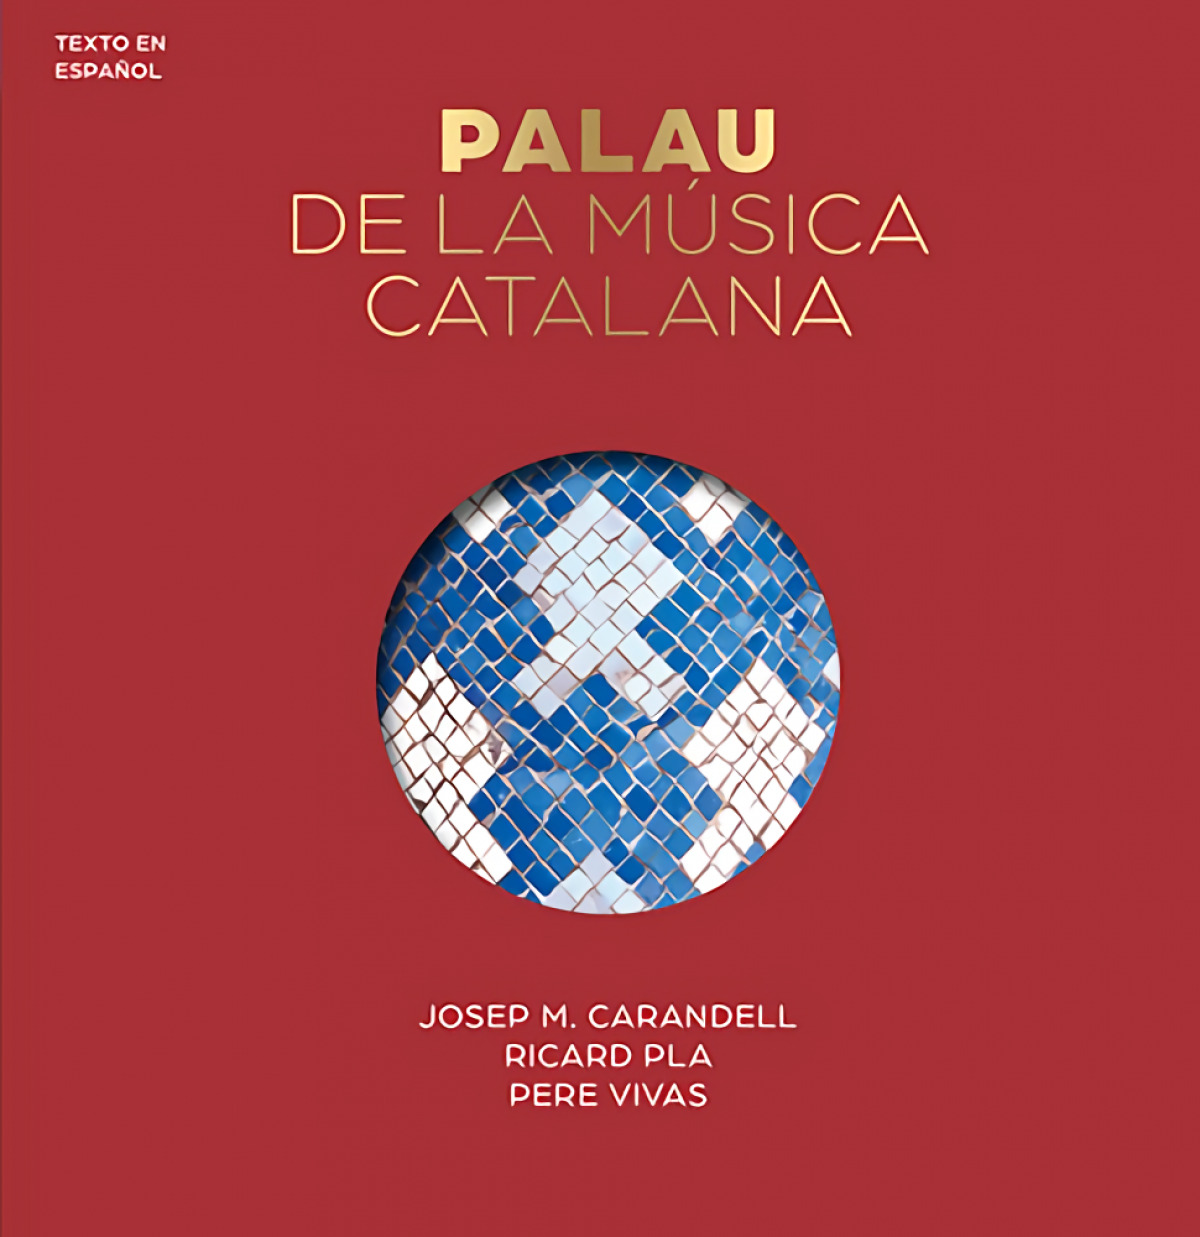 El palau de la musica catalana (serie 4) (castellano) - Vivas Ortiz, Pere, fot./ Pla Boada, Rica